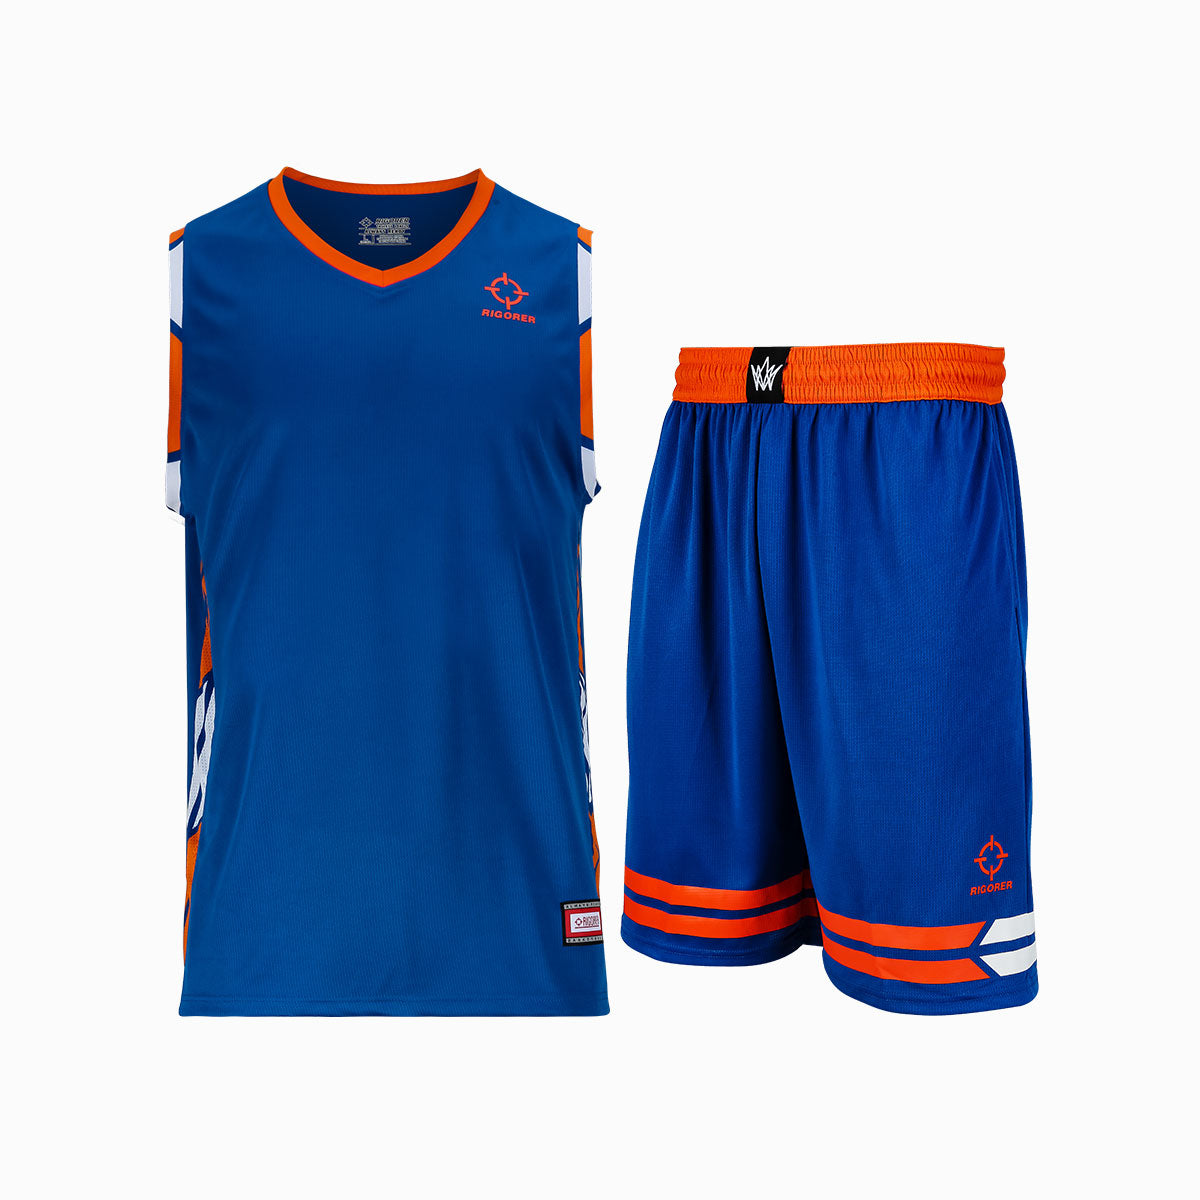 Custom Orange Basketball Jersey  Custom basketball, Basketball jersey,  Jersey